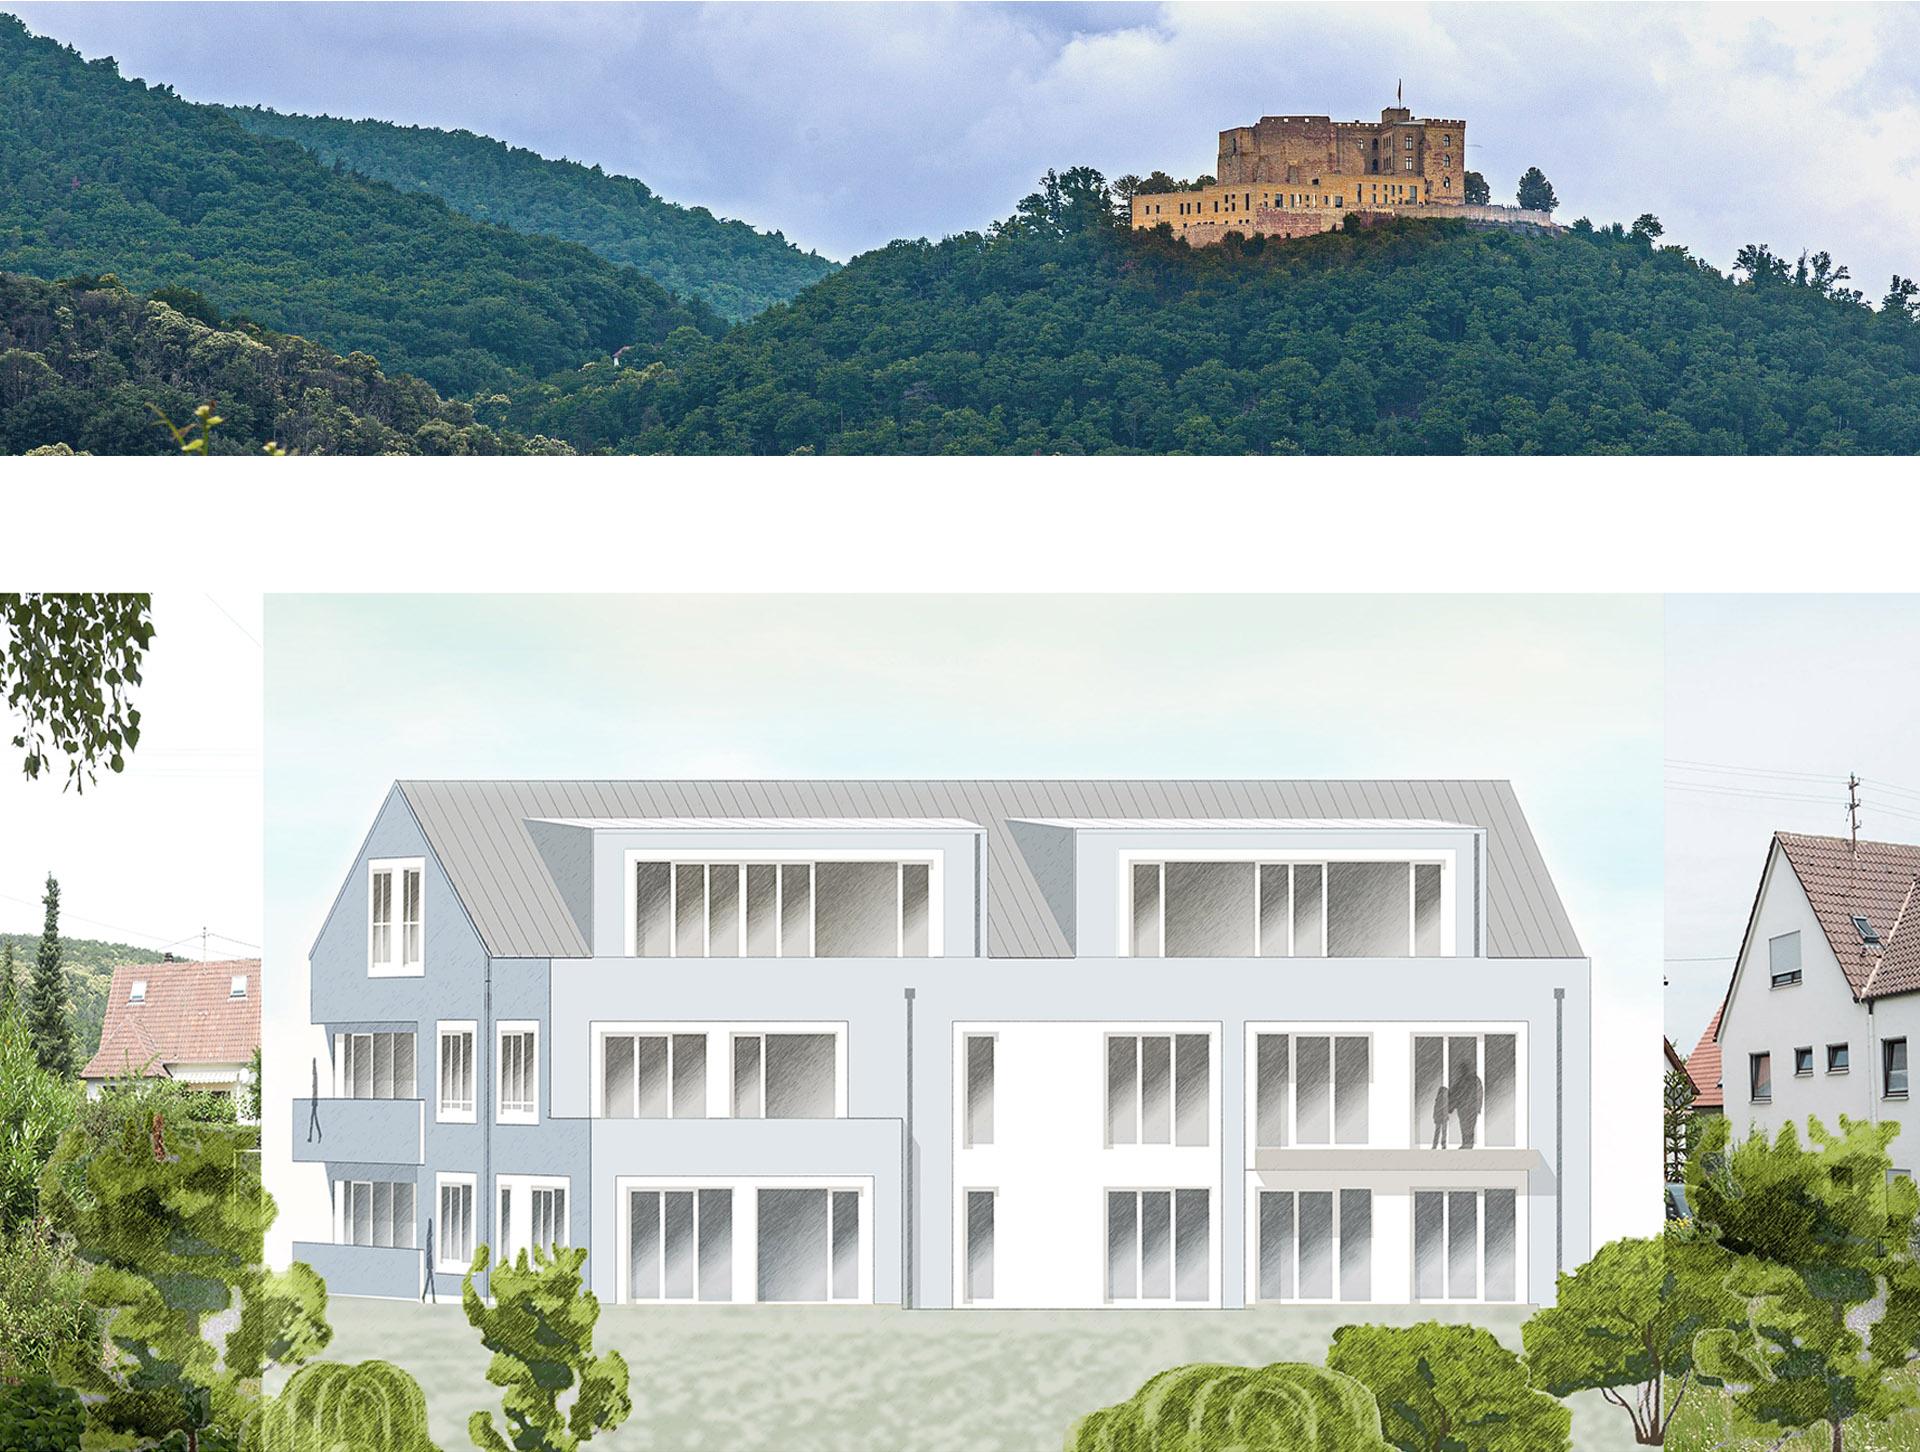 The project Wohnen am Fußes des Hambacher Schloss